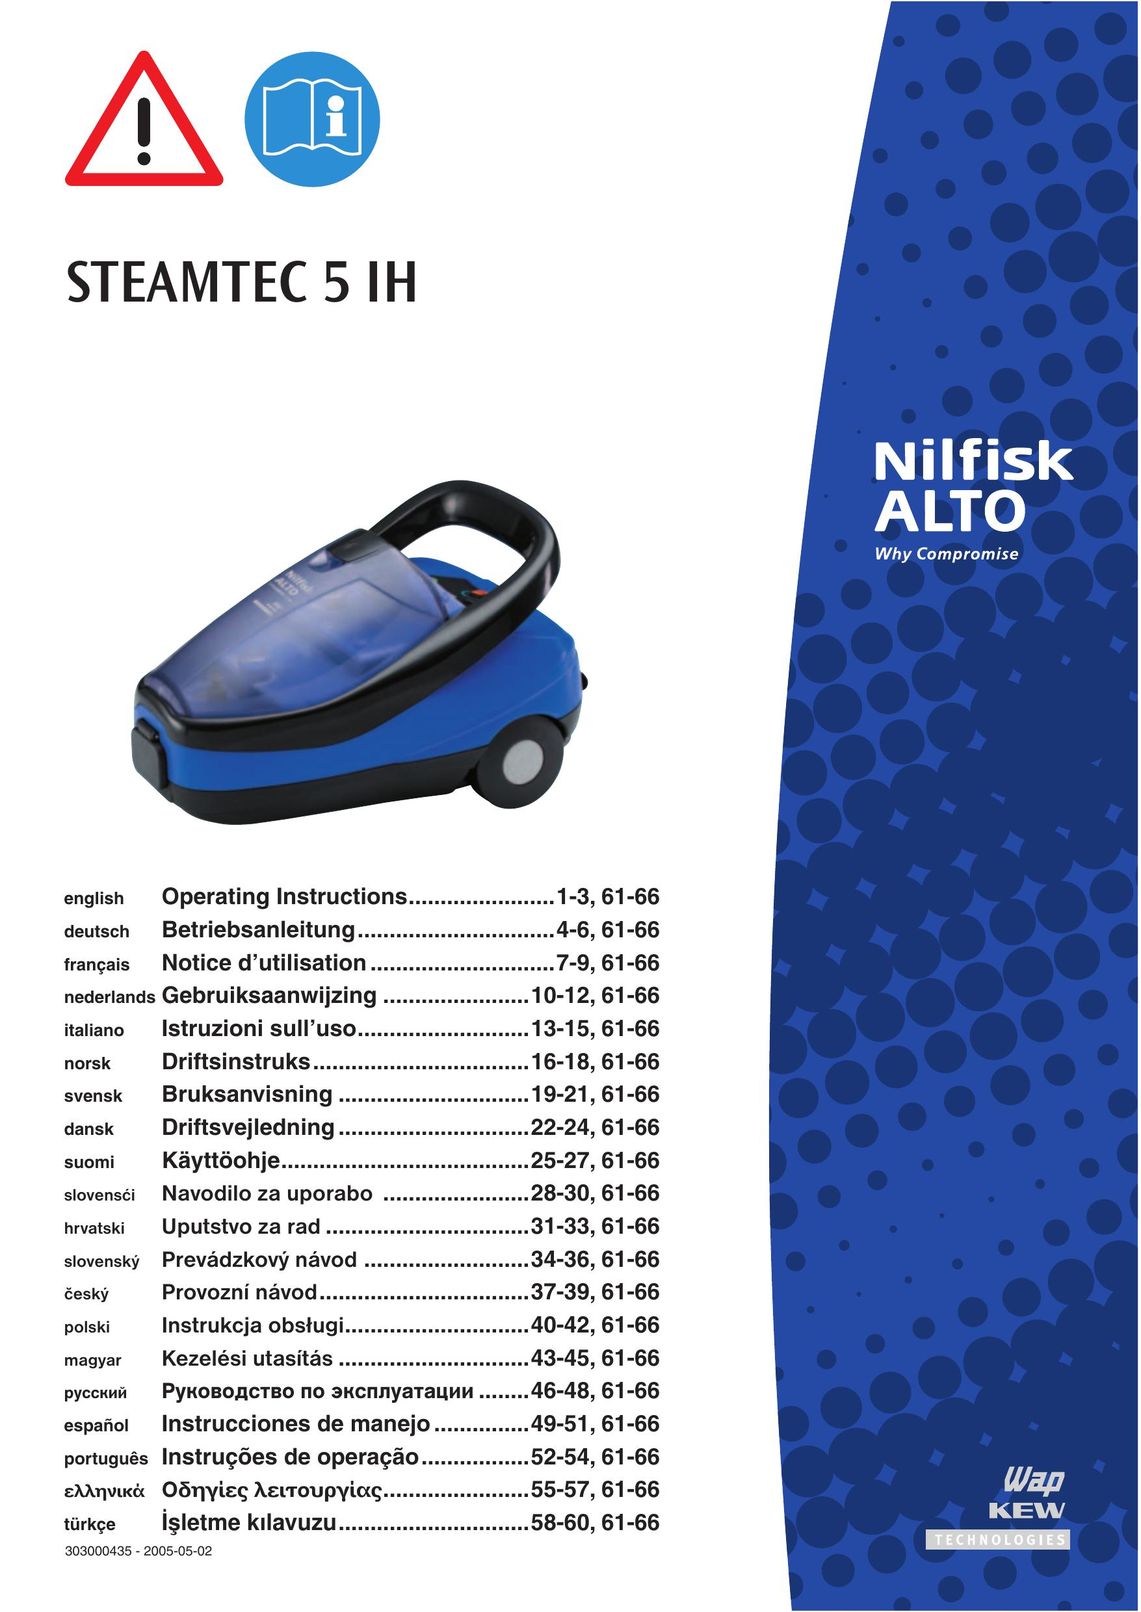 Nilfisk-ALTO STEAMTEC 5 IH Carpet Cleaner User Manual